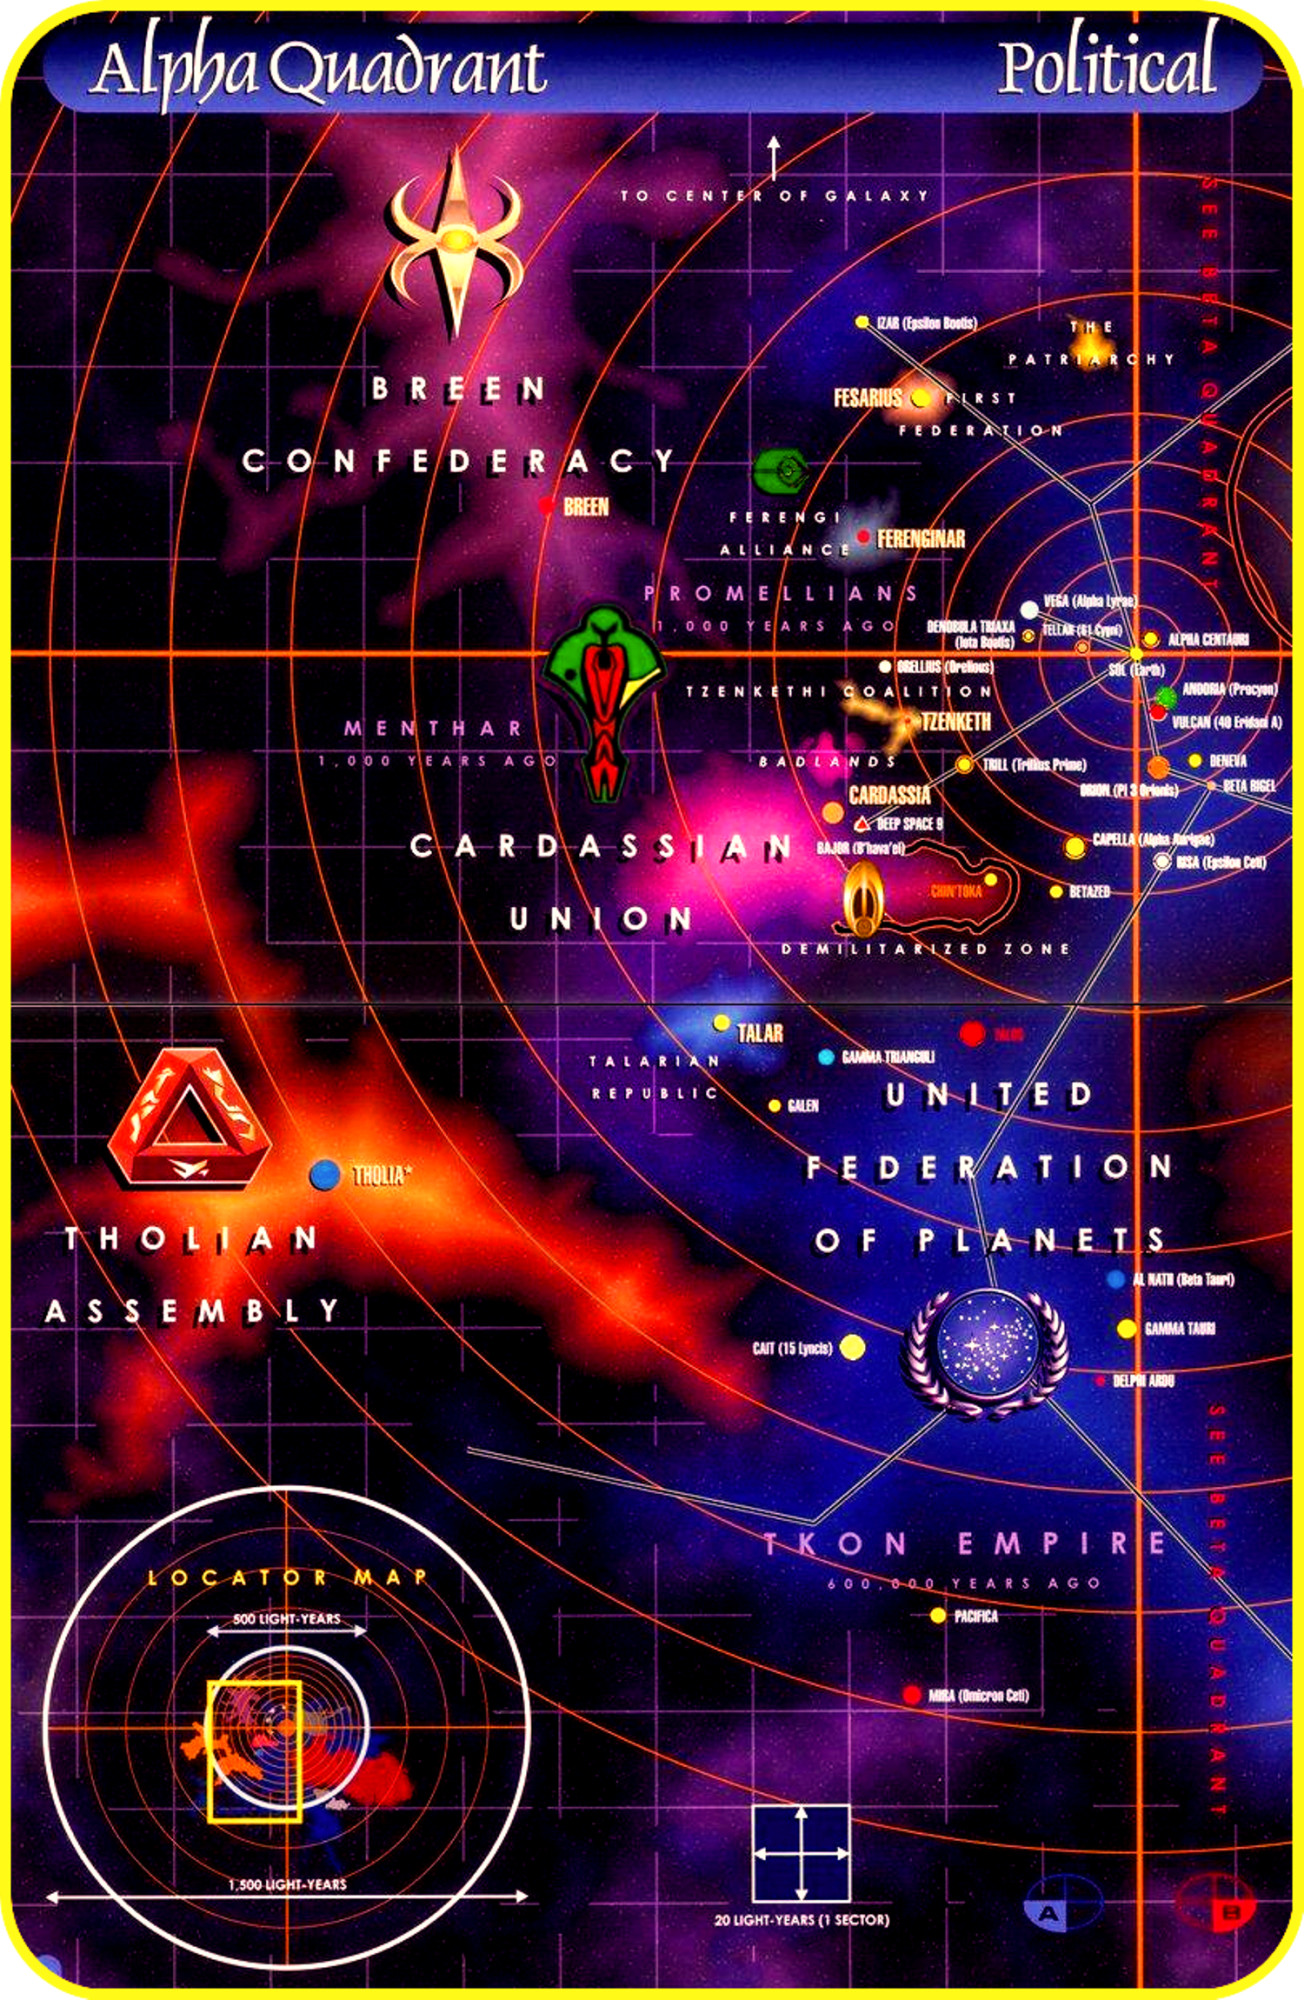 1304x2000 Star Trek images Â«Map Space of the Alpha - QuadrantÂ» [ Â«Star Trek UniverseÂ»  ] HD wallpaper and background photos